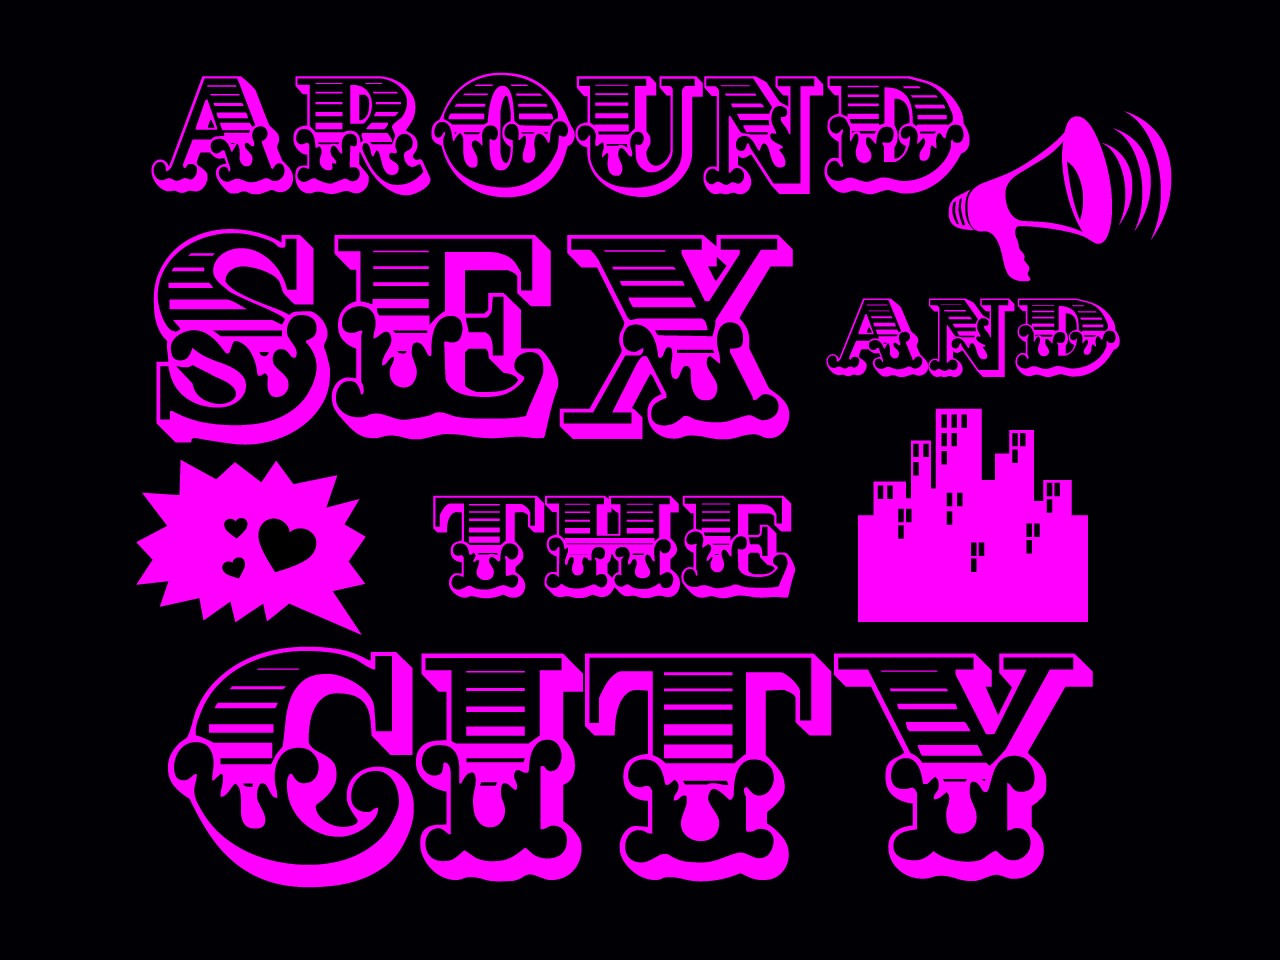 around SEX & the City